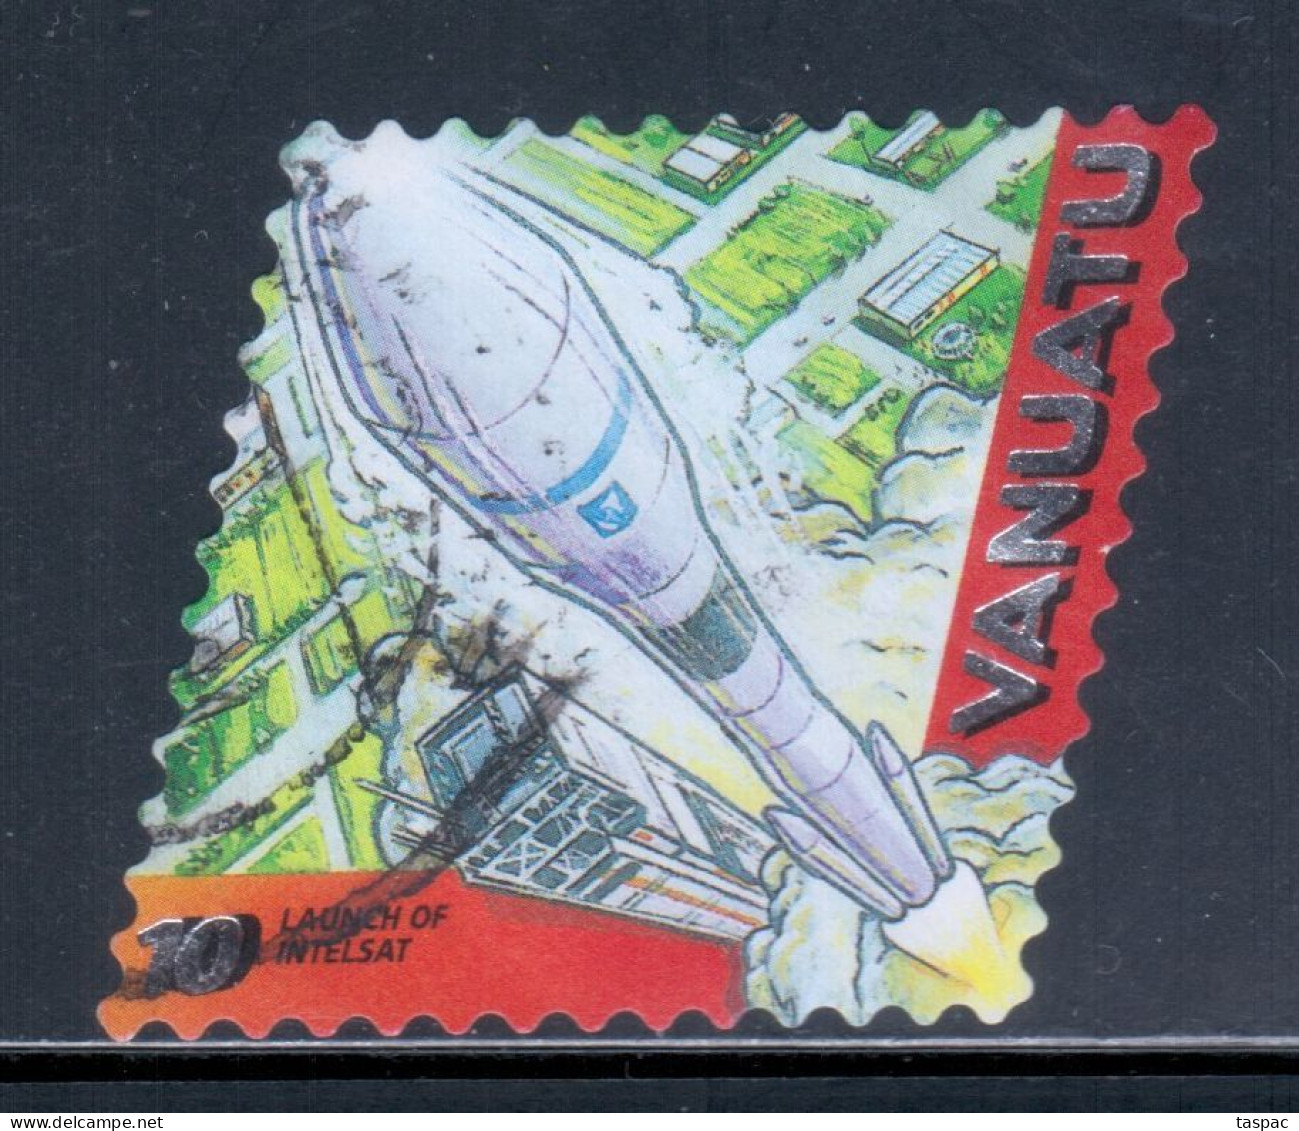 Vanuatu 2000 Mi# 1112 Used - Short Set - Launch Of Intelsat / Space - Ozeanien